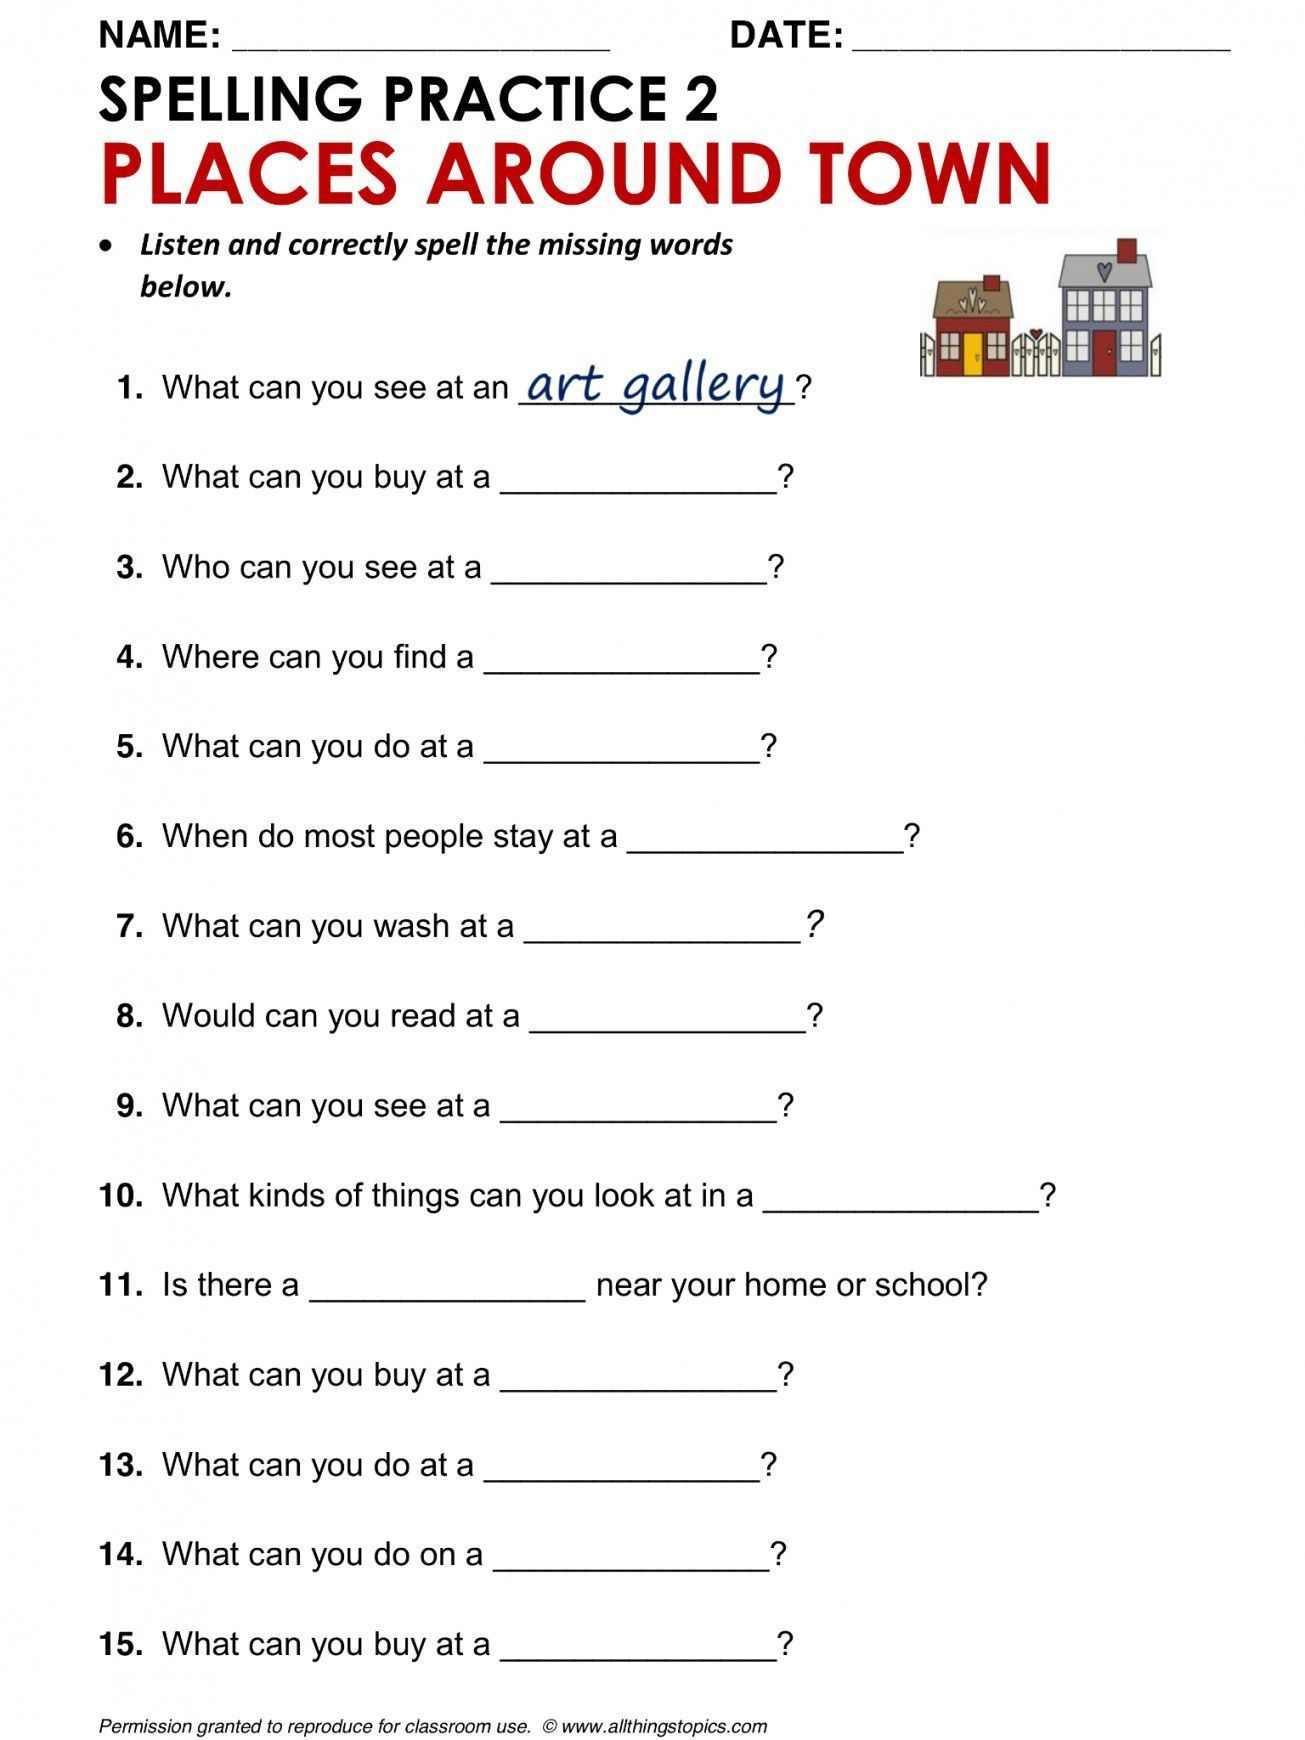 Basic English Worksheets Education Reading For Kids English Learn 